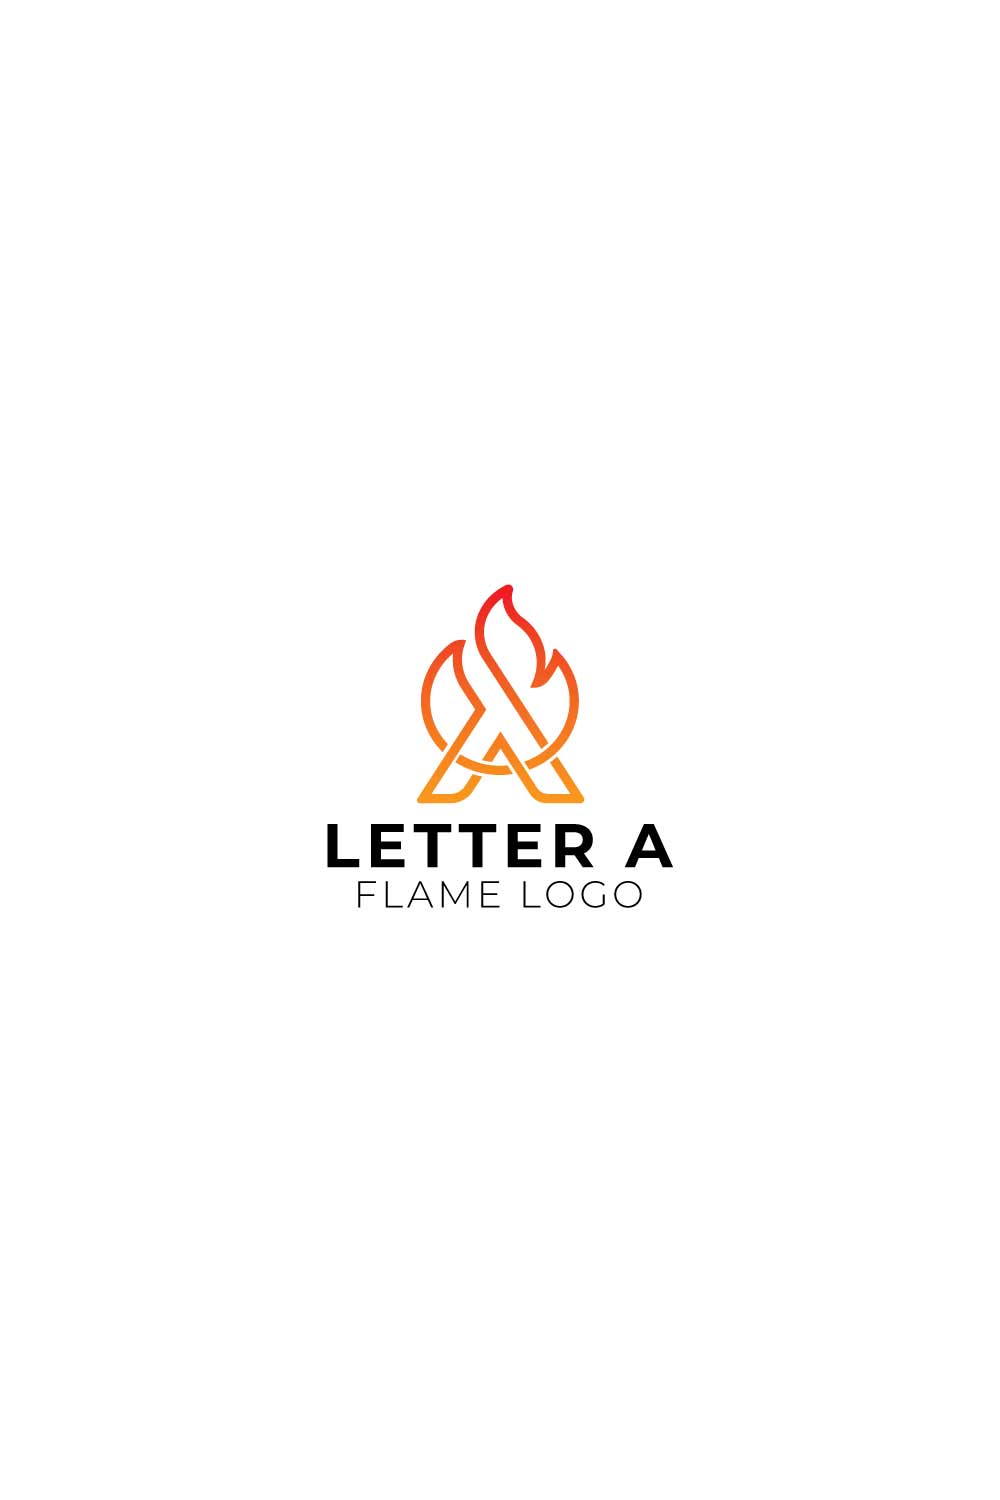 Elegant Letter A Flame Logo pinterest preview image.